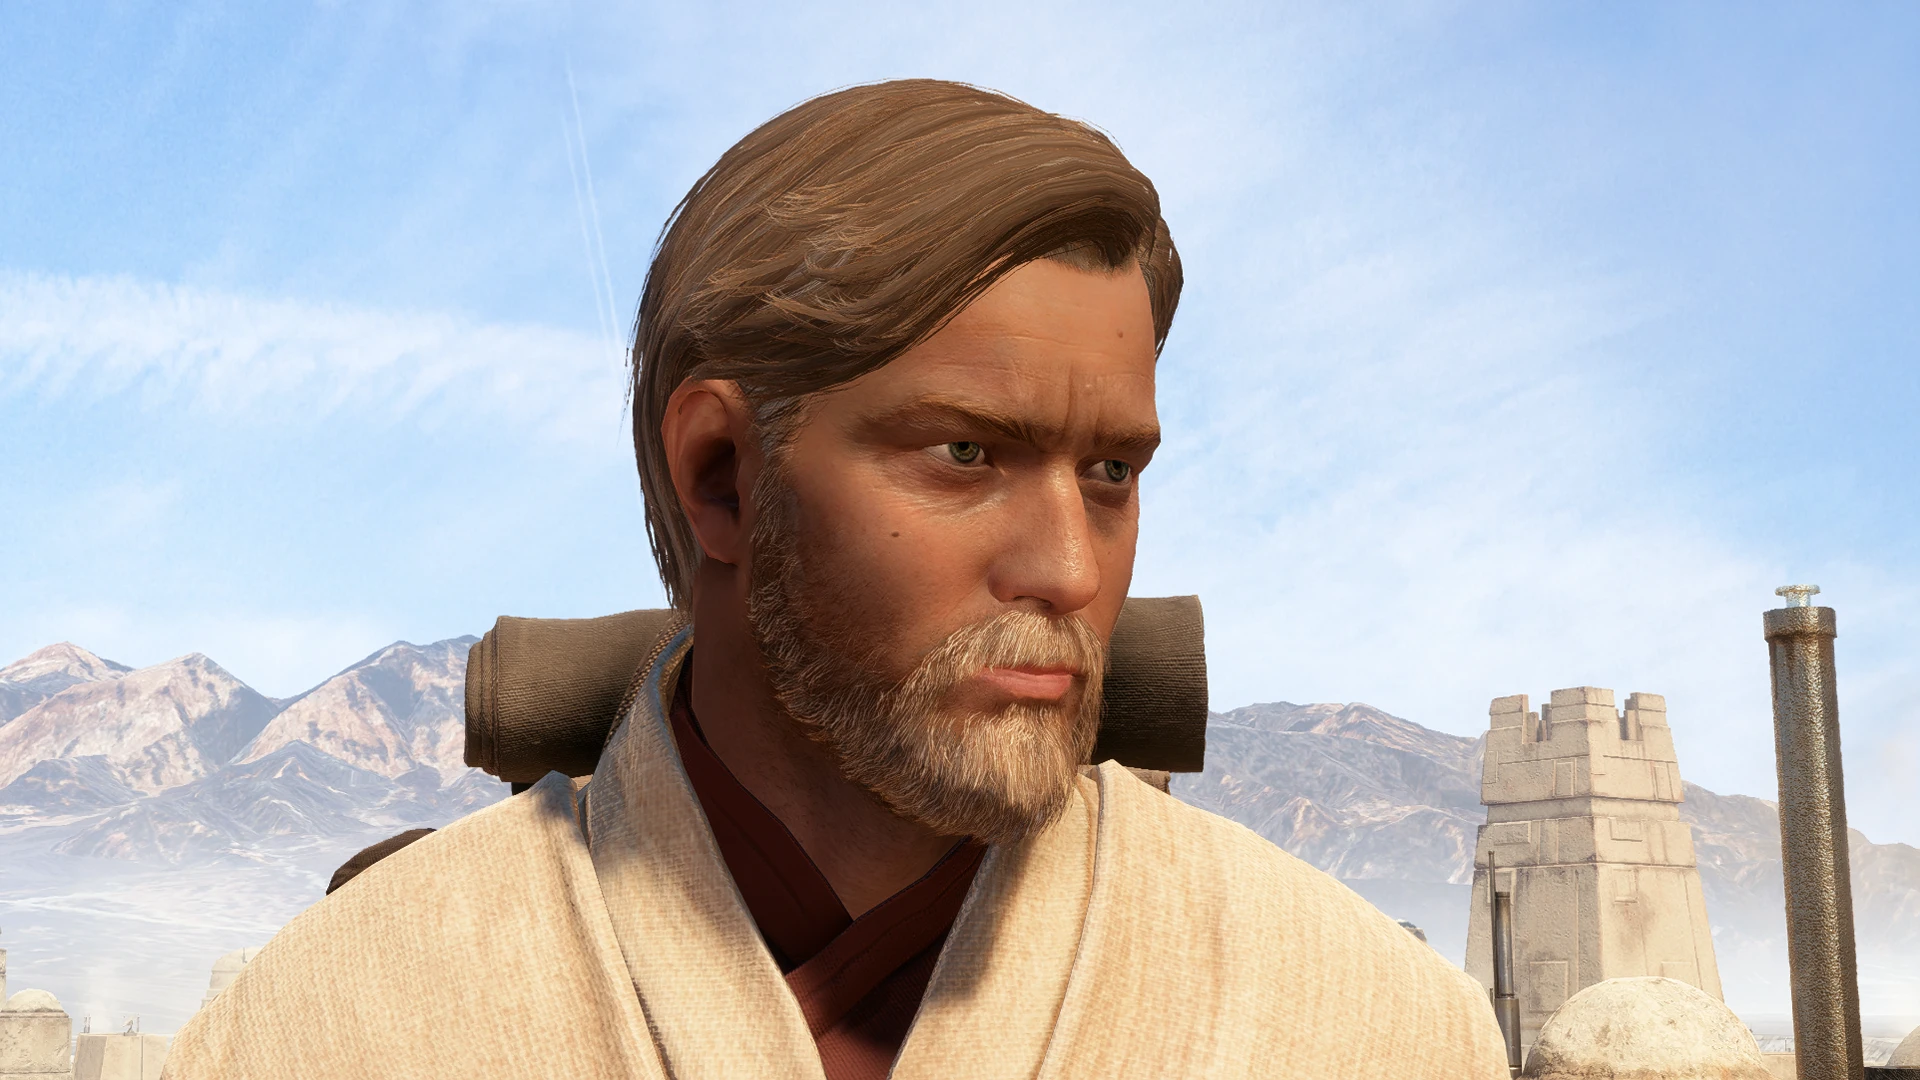 Obi Wan Kenobi Episode 3 5 Mythos At Star Wars Battlefront Ii Images, Photos, Reviews